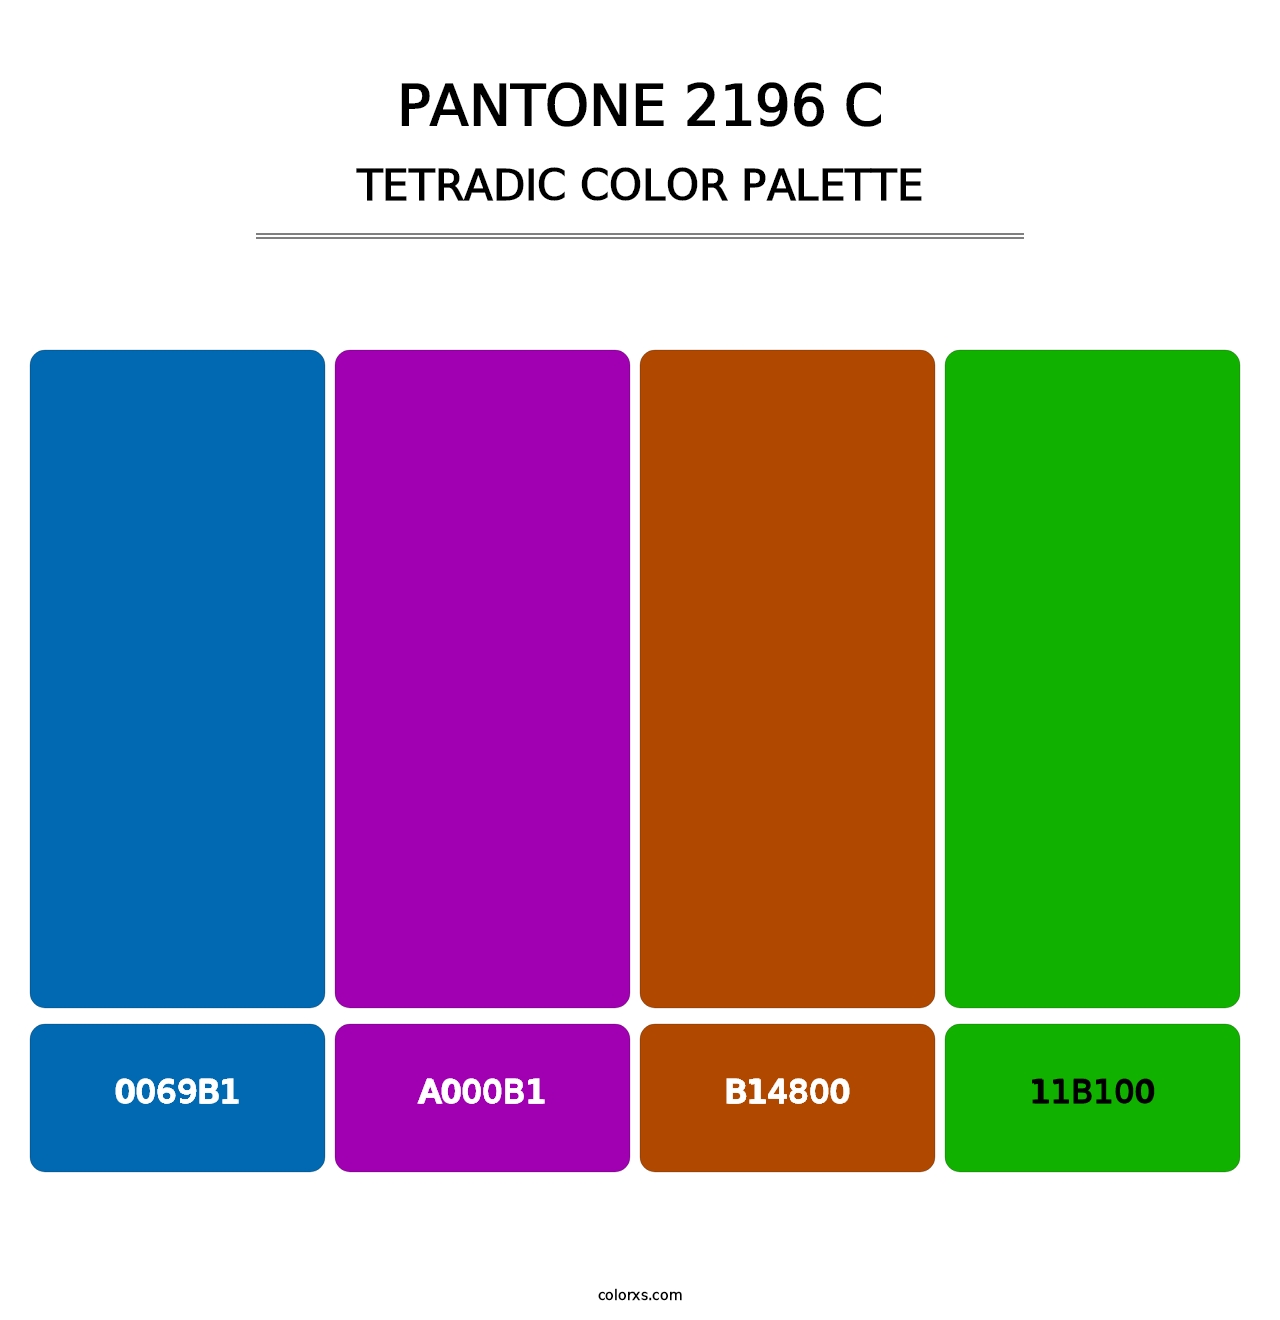 PANTONE 2196 C - Tetradic Color Palette